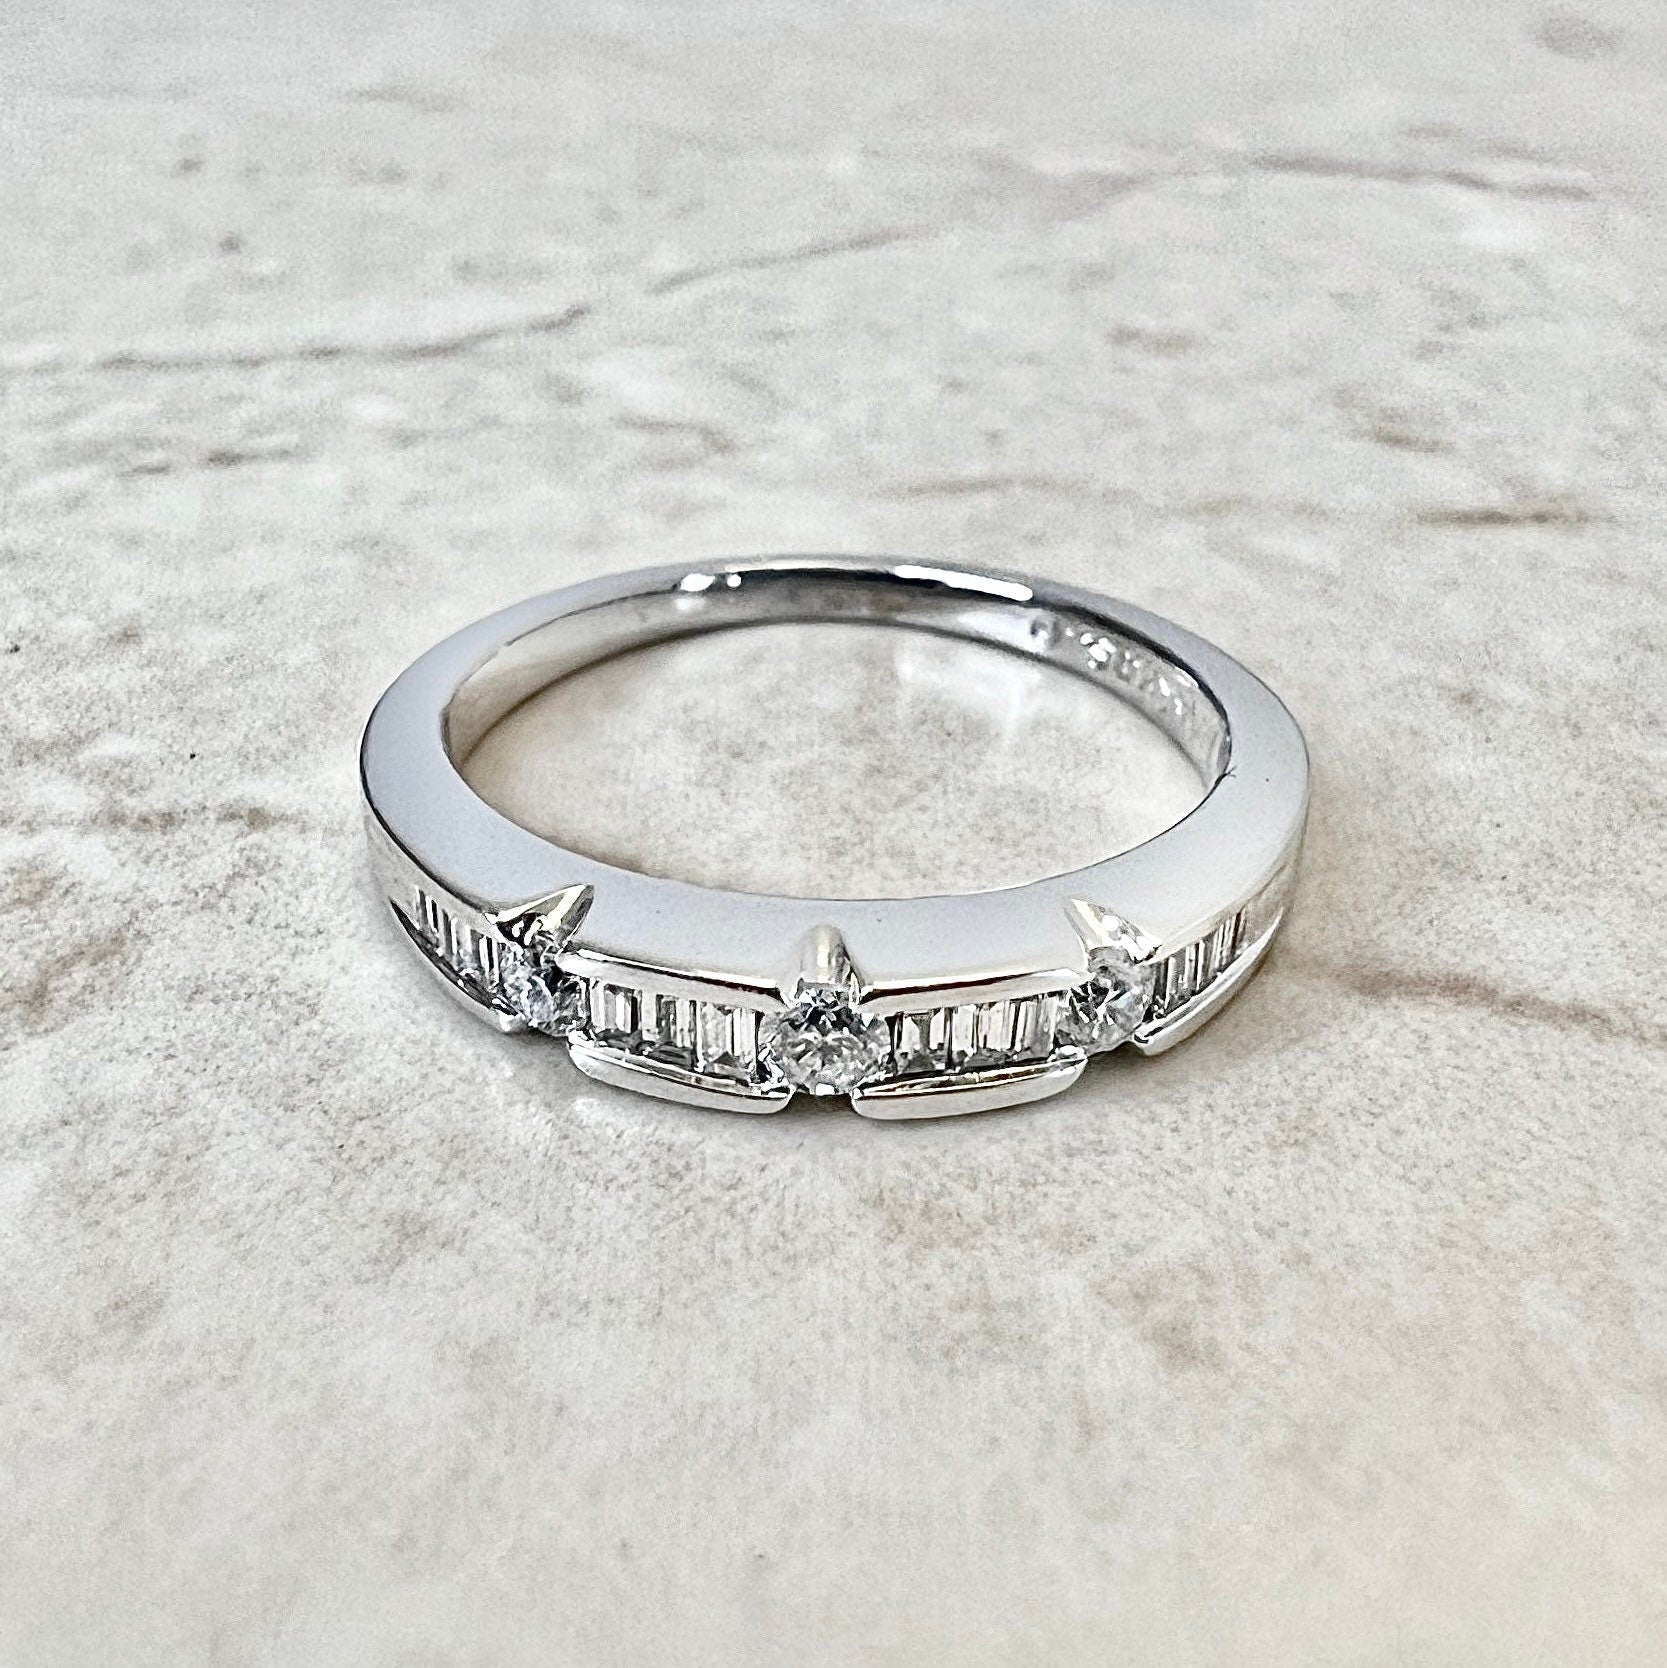 14K Diamond Band Ring - White Gold Diamond Band - Anniversary Ring - Diamond Wedding Ring - White Gold Diamond Ring - Half Eternity Ring